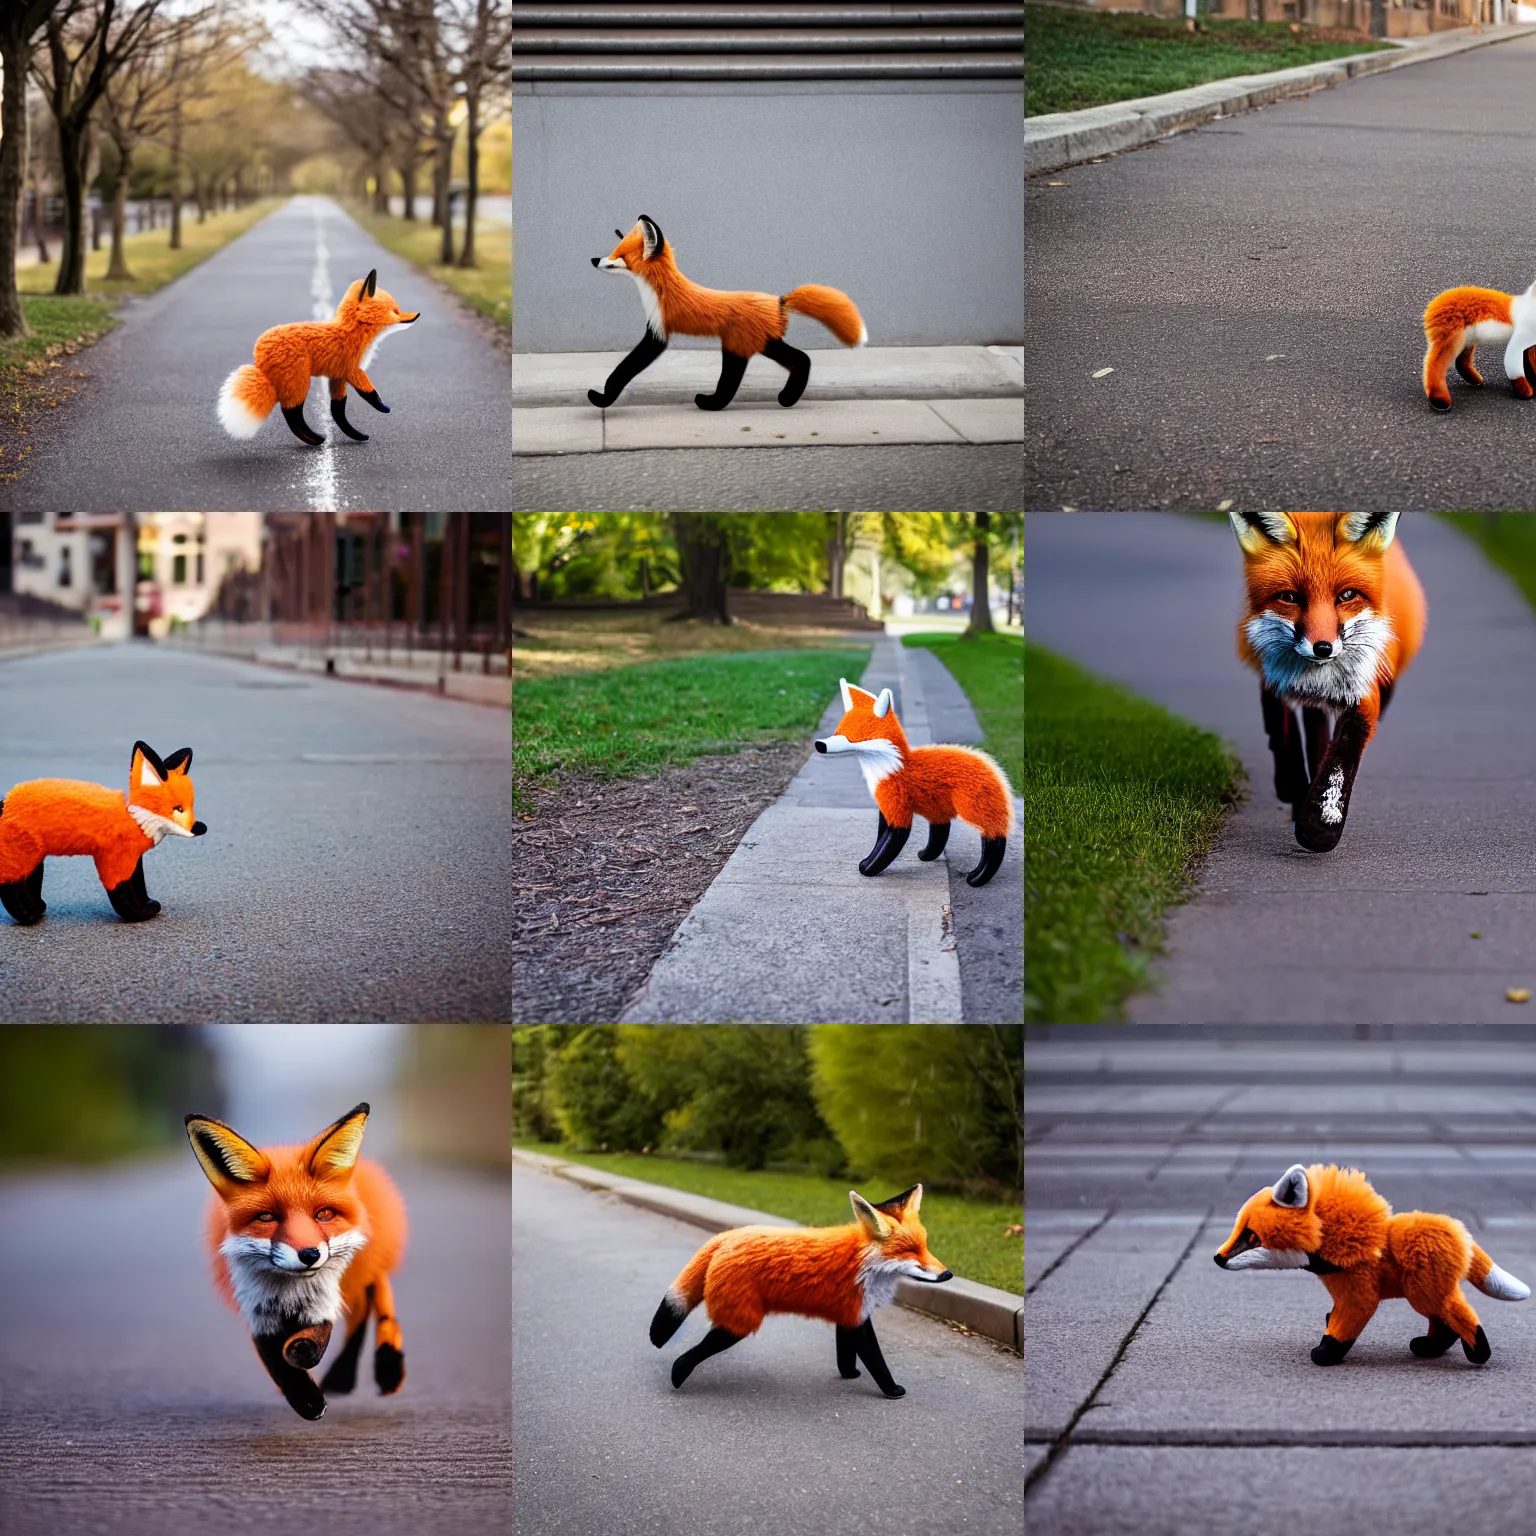 Prompt: A fox stuffed animal jogging along the sidewalk, Sigma 85mm Lens F/1.8, award winning photography